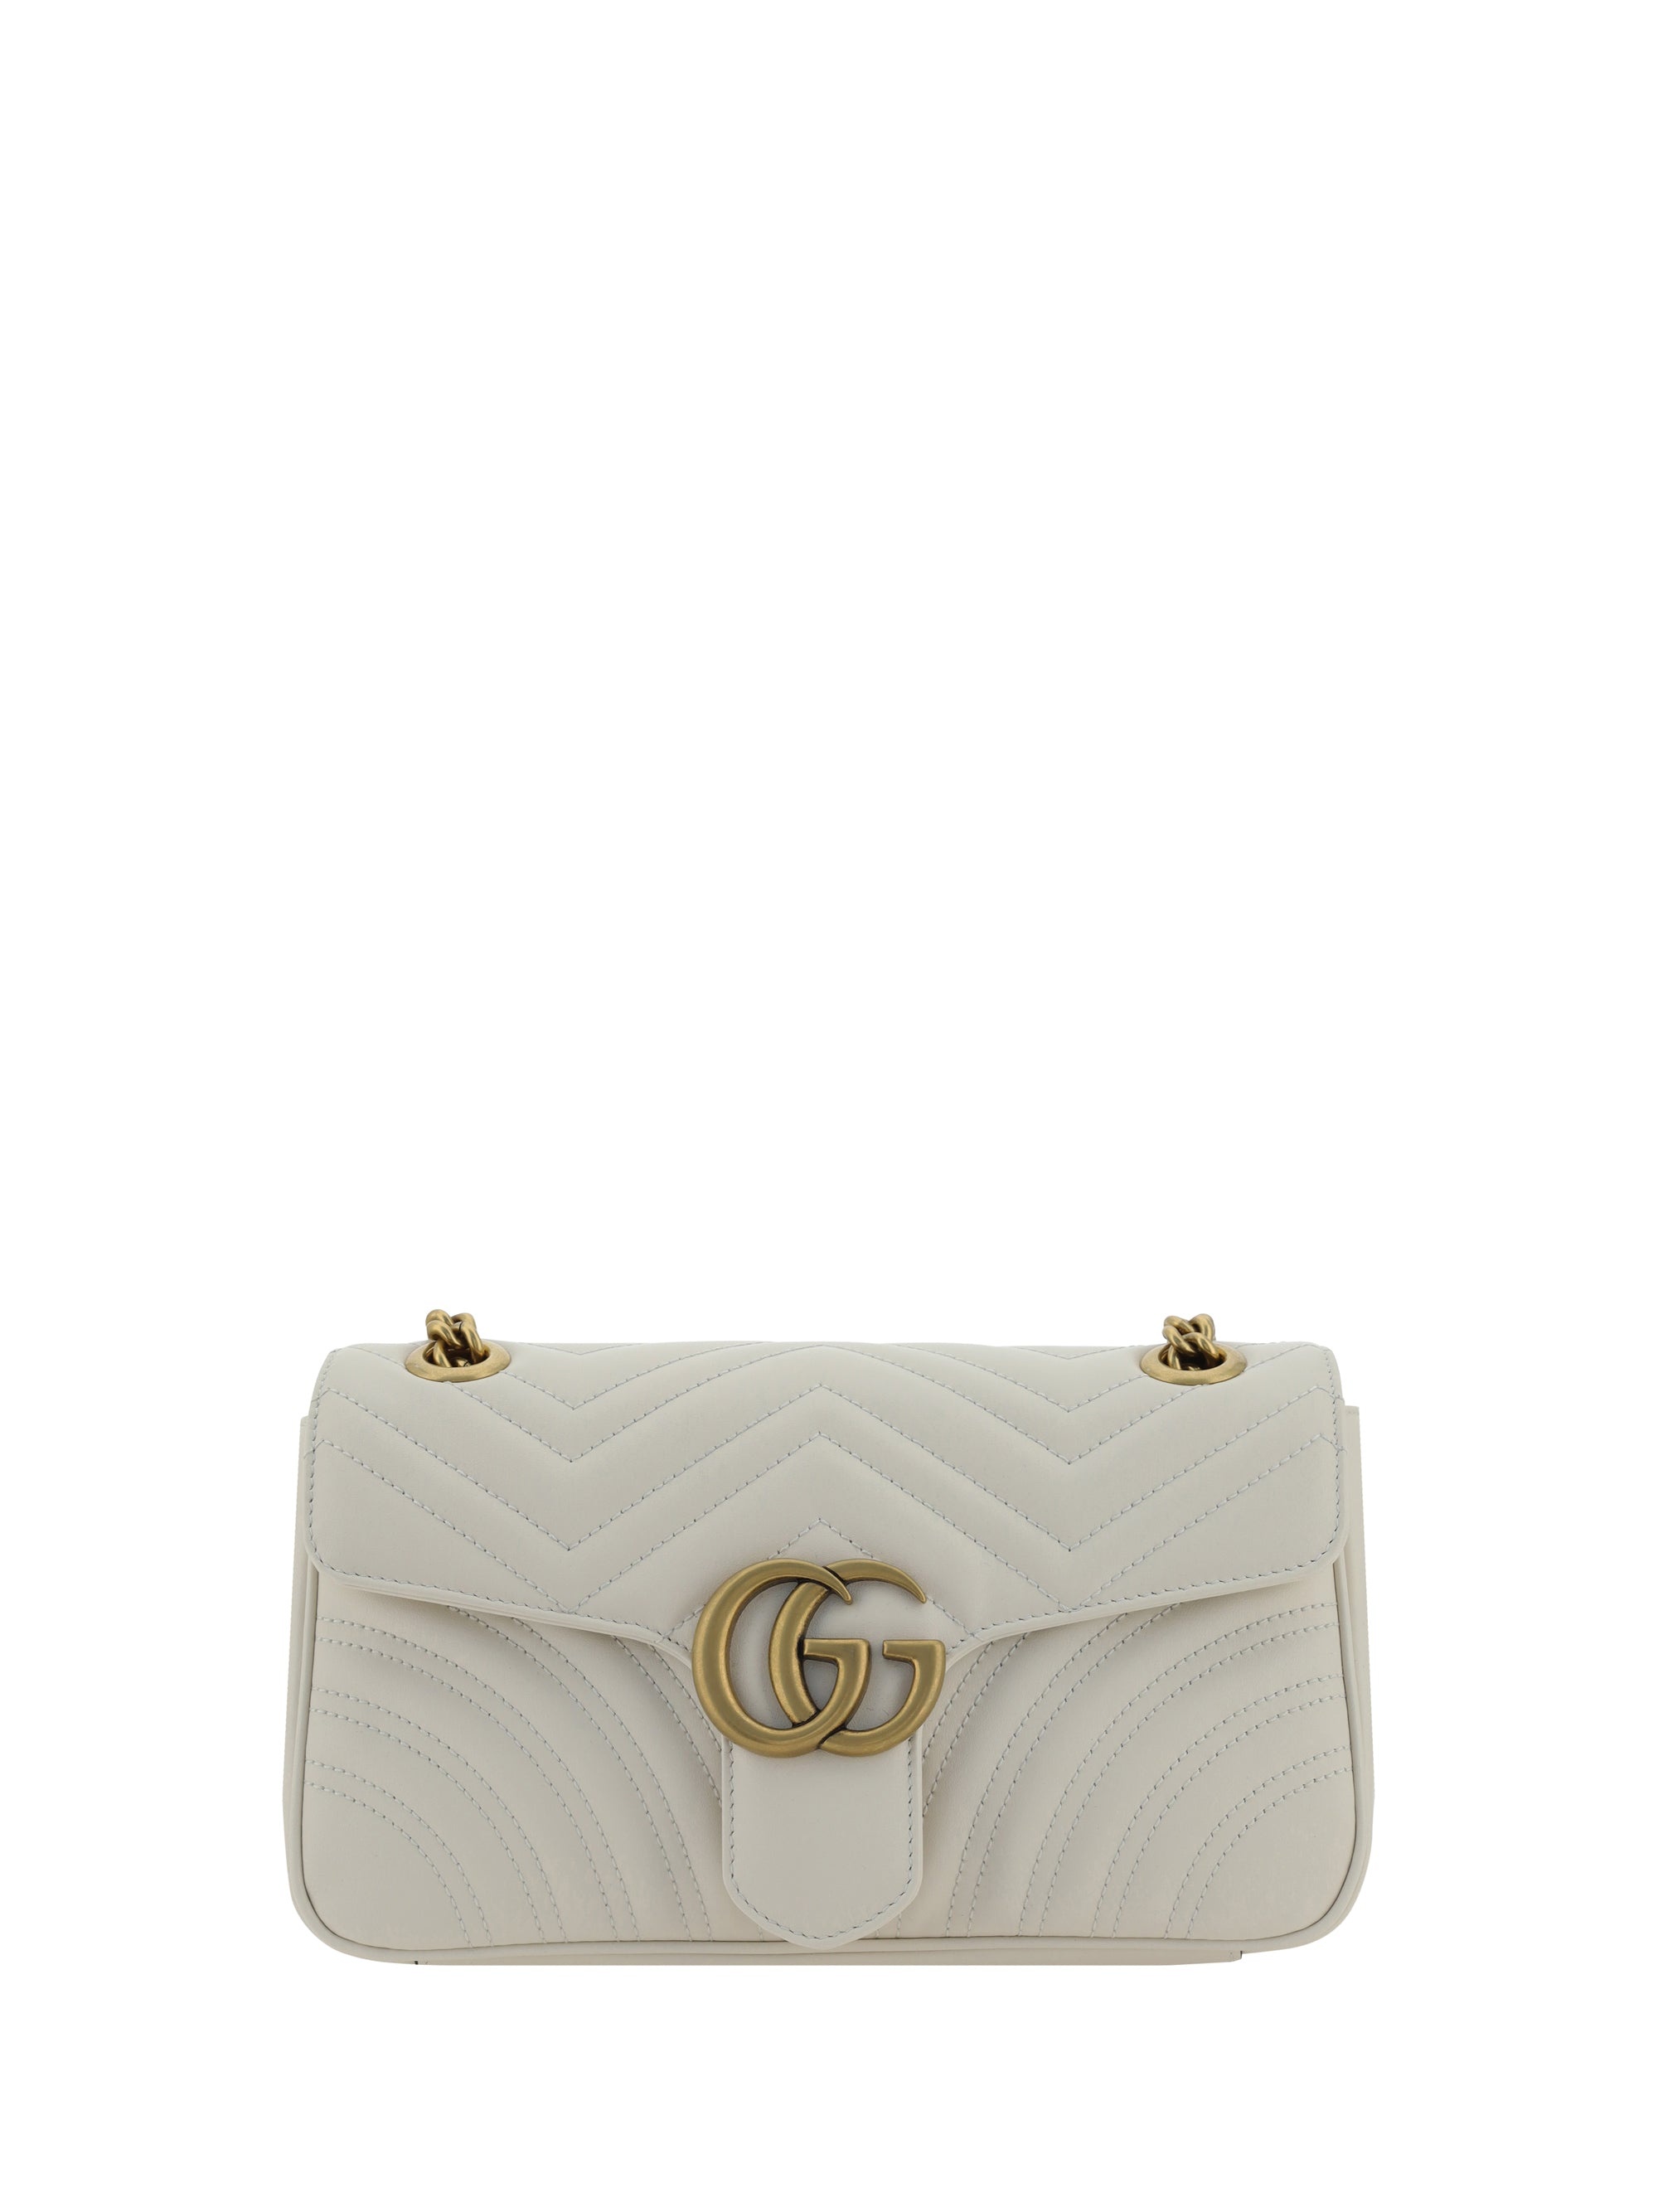 Gucci Women Gg Marmont 2.0 Shoulder Bag - 1